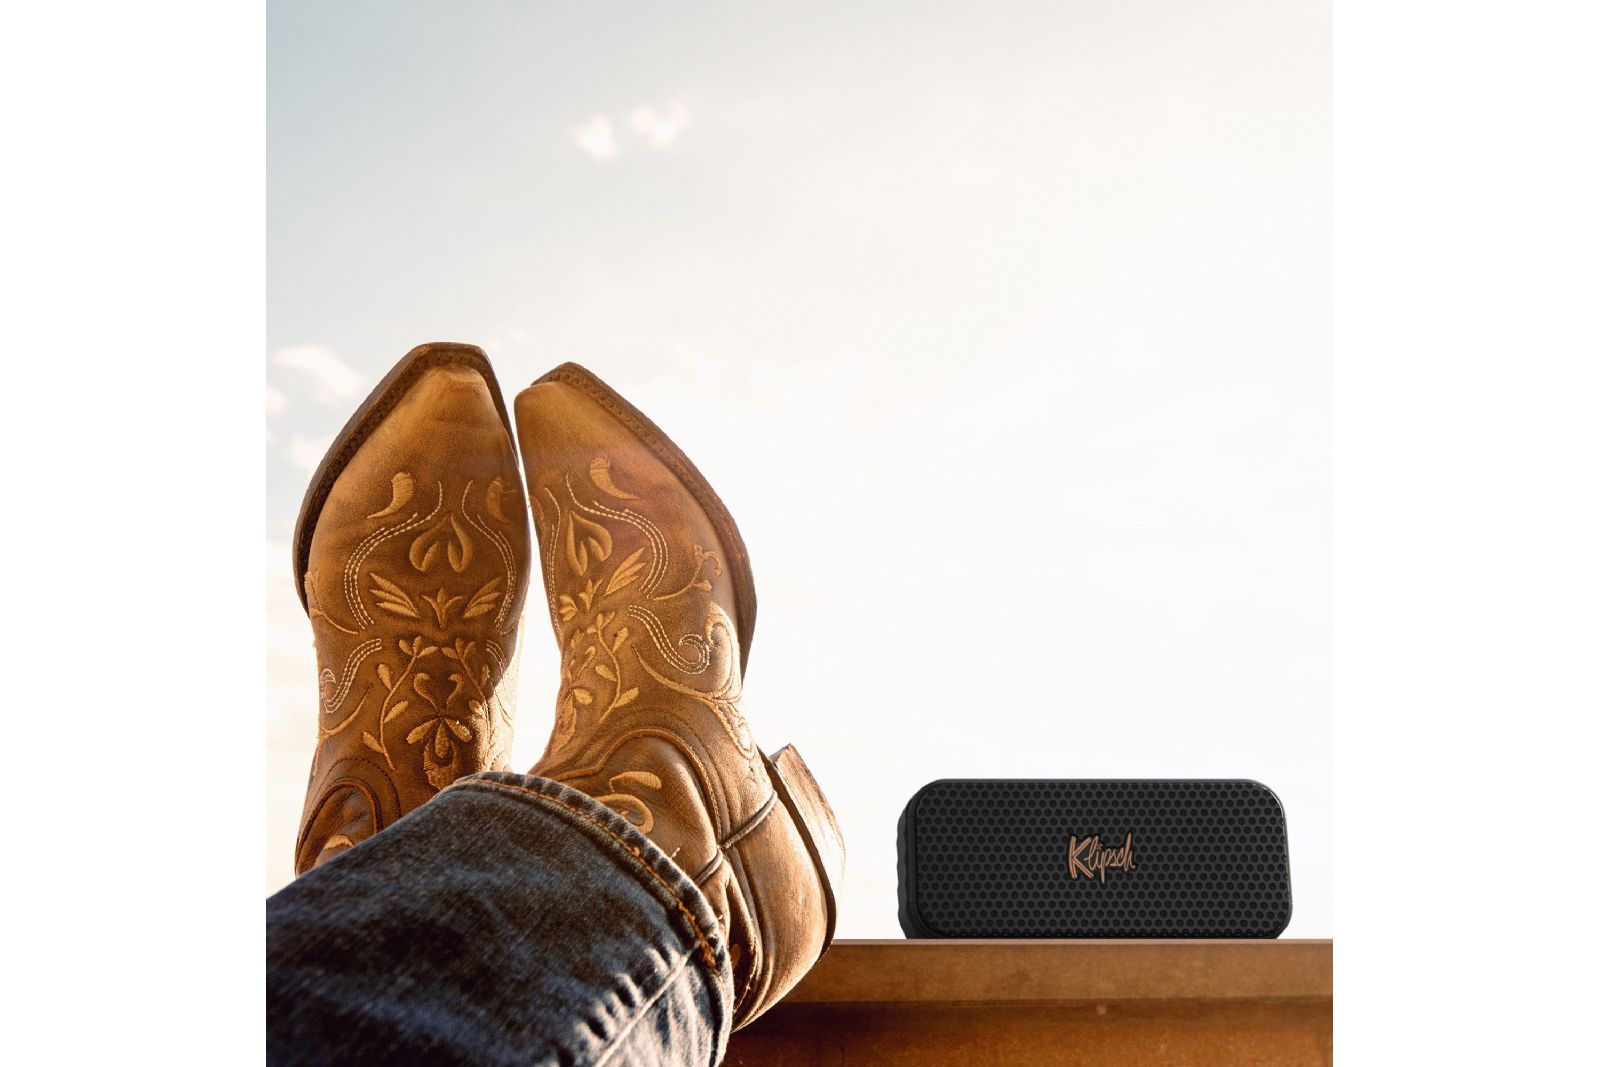 Bluetooth högtalare Klipsch Nashville portabel Bluetooth-högtalare